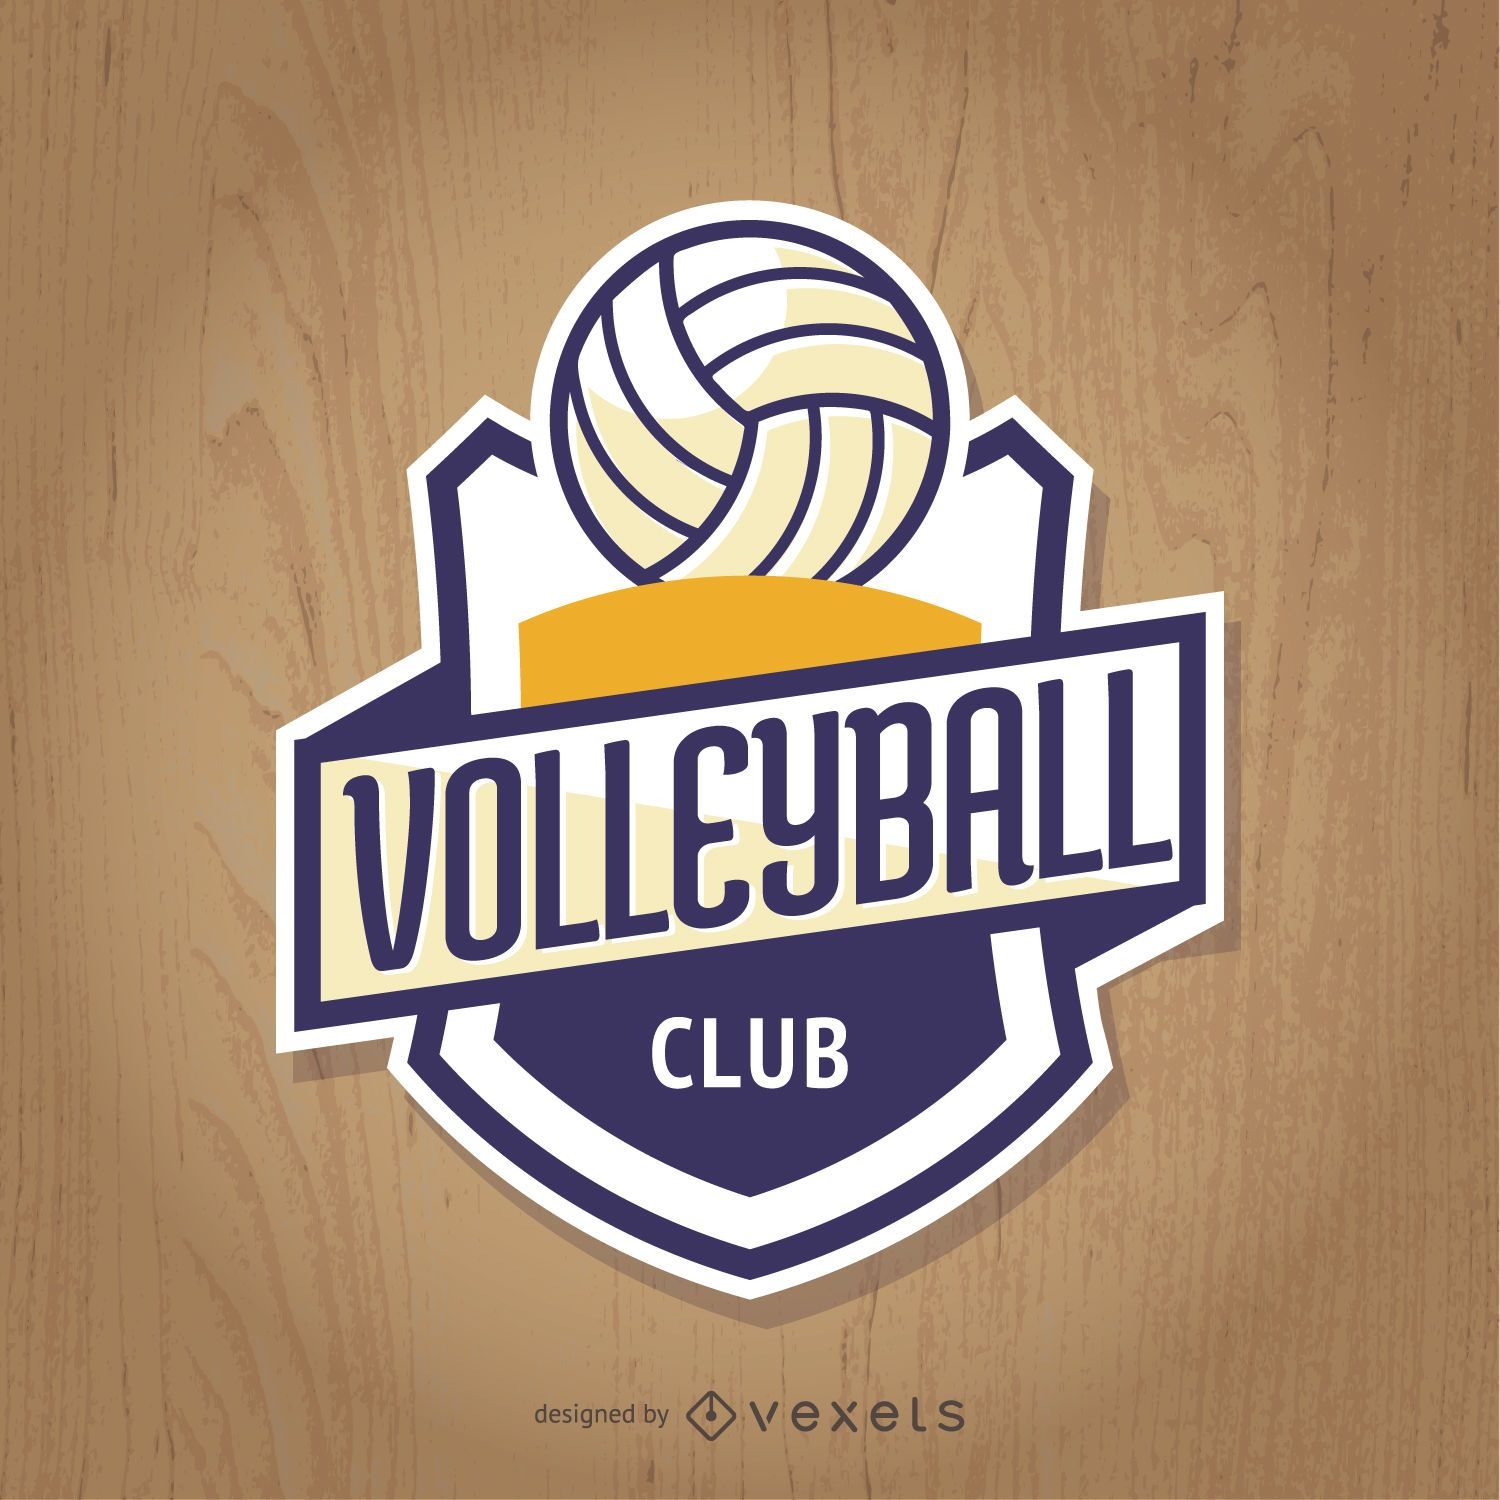 Volleyball club insignia